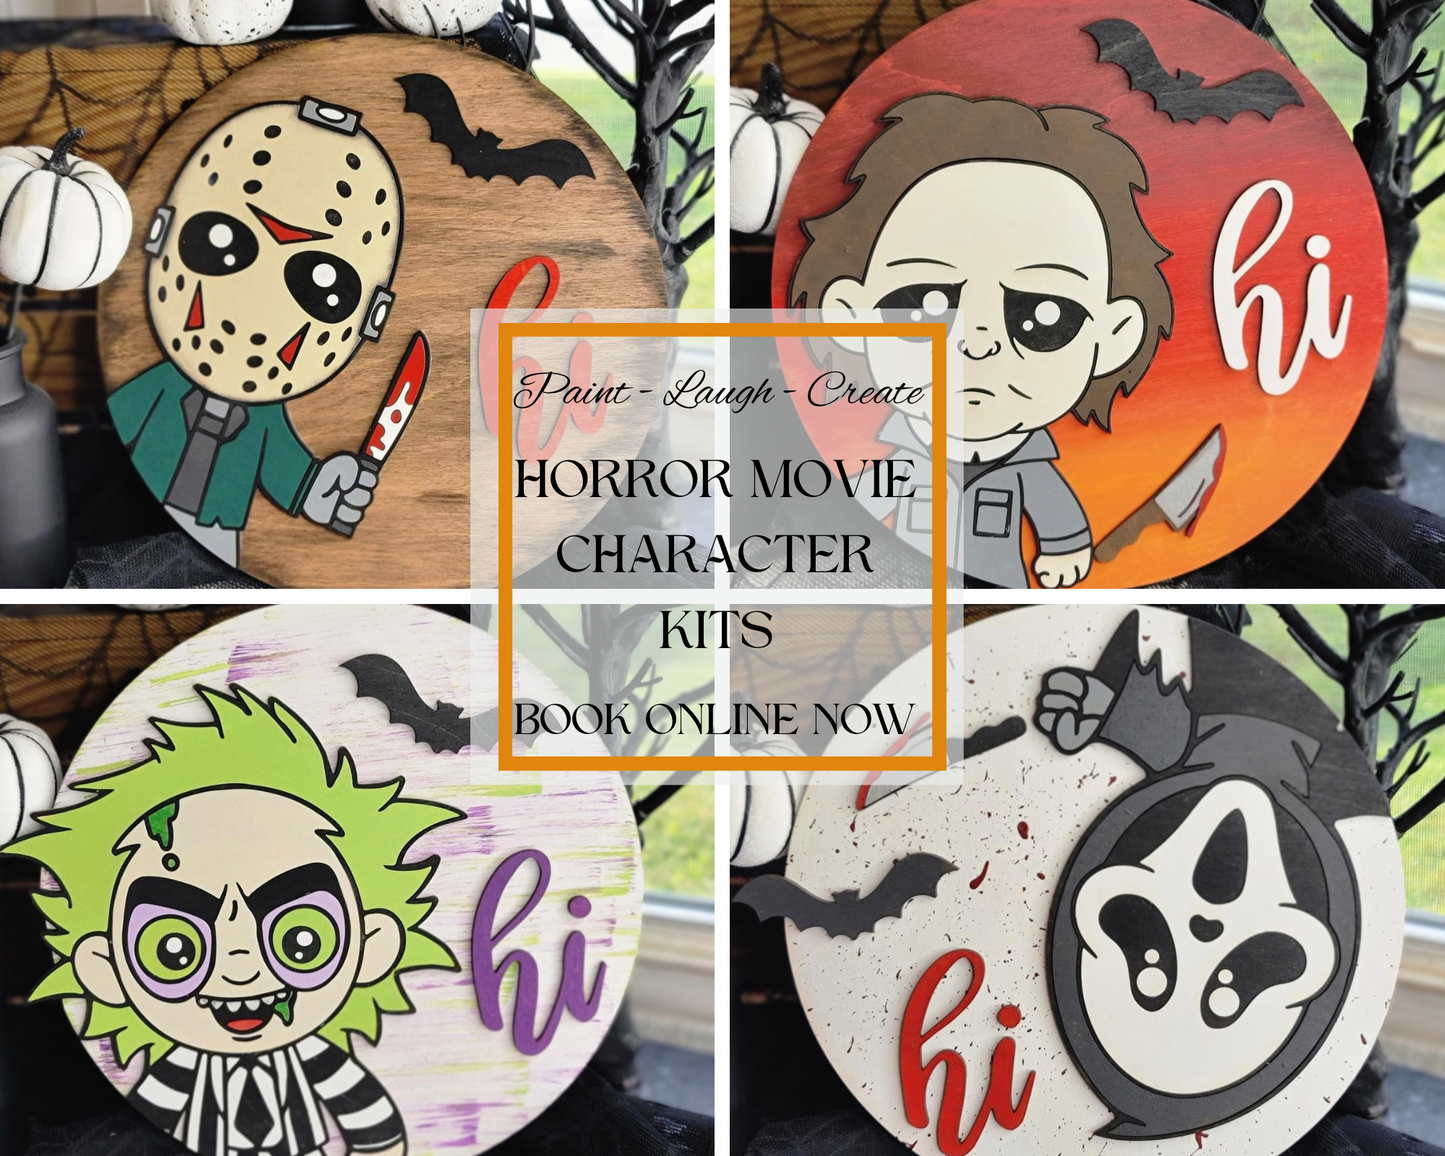 Horror Movie Character Kits (Take & Make)